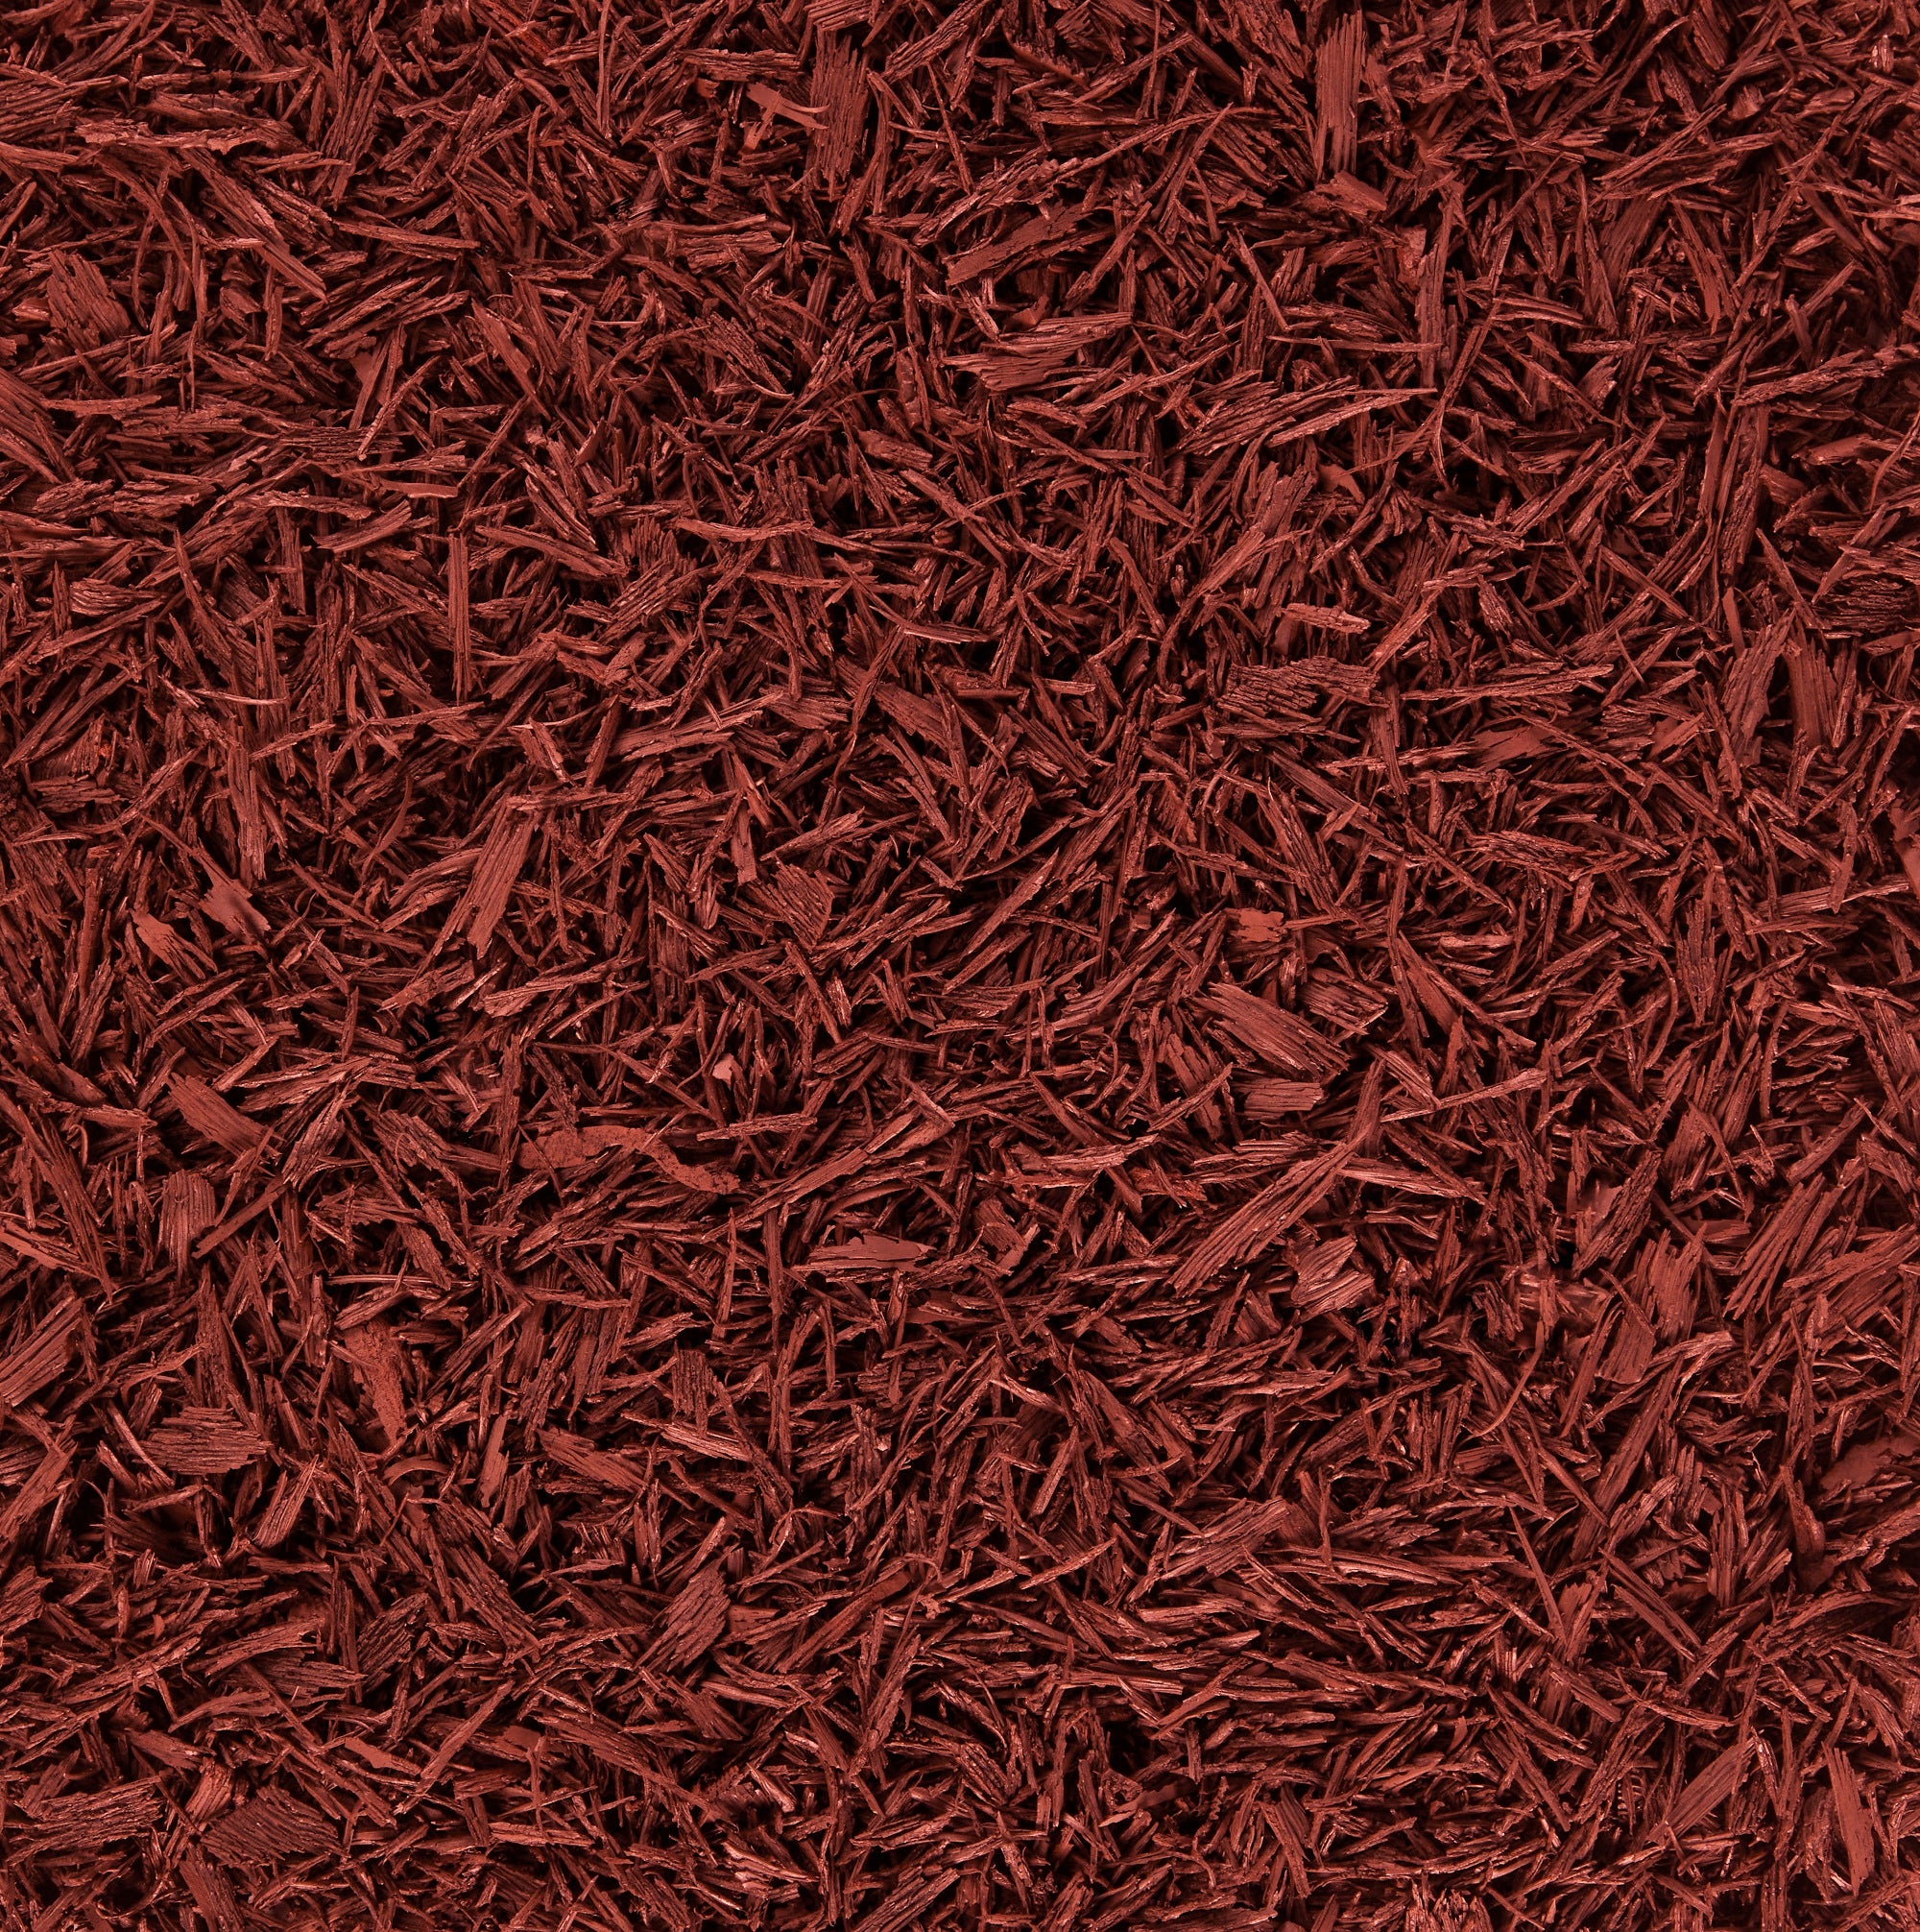 Shredded Rubber Mulch | Red